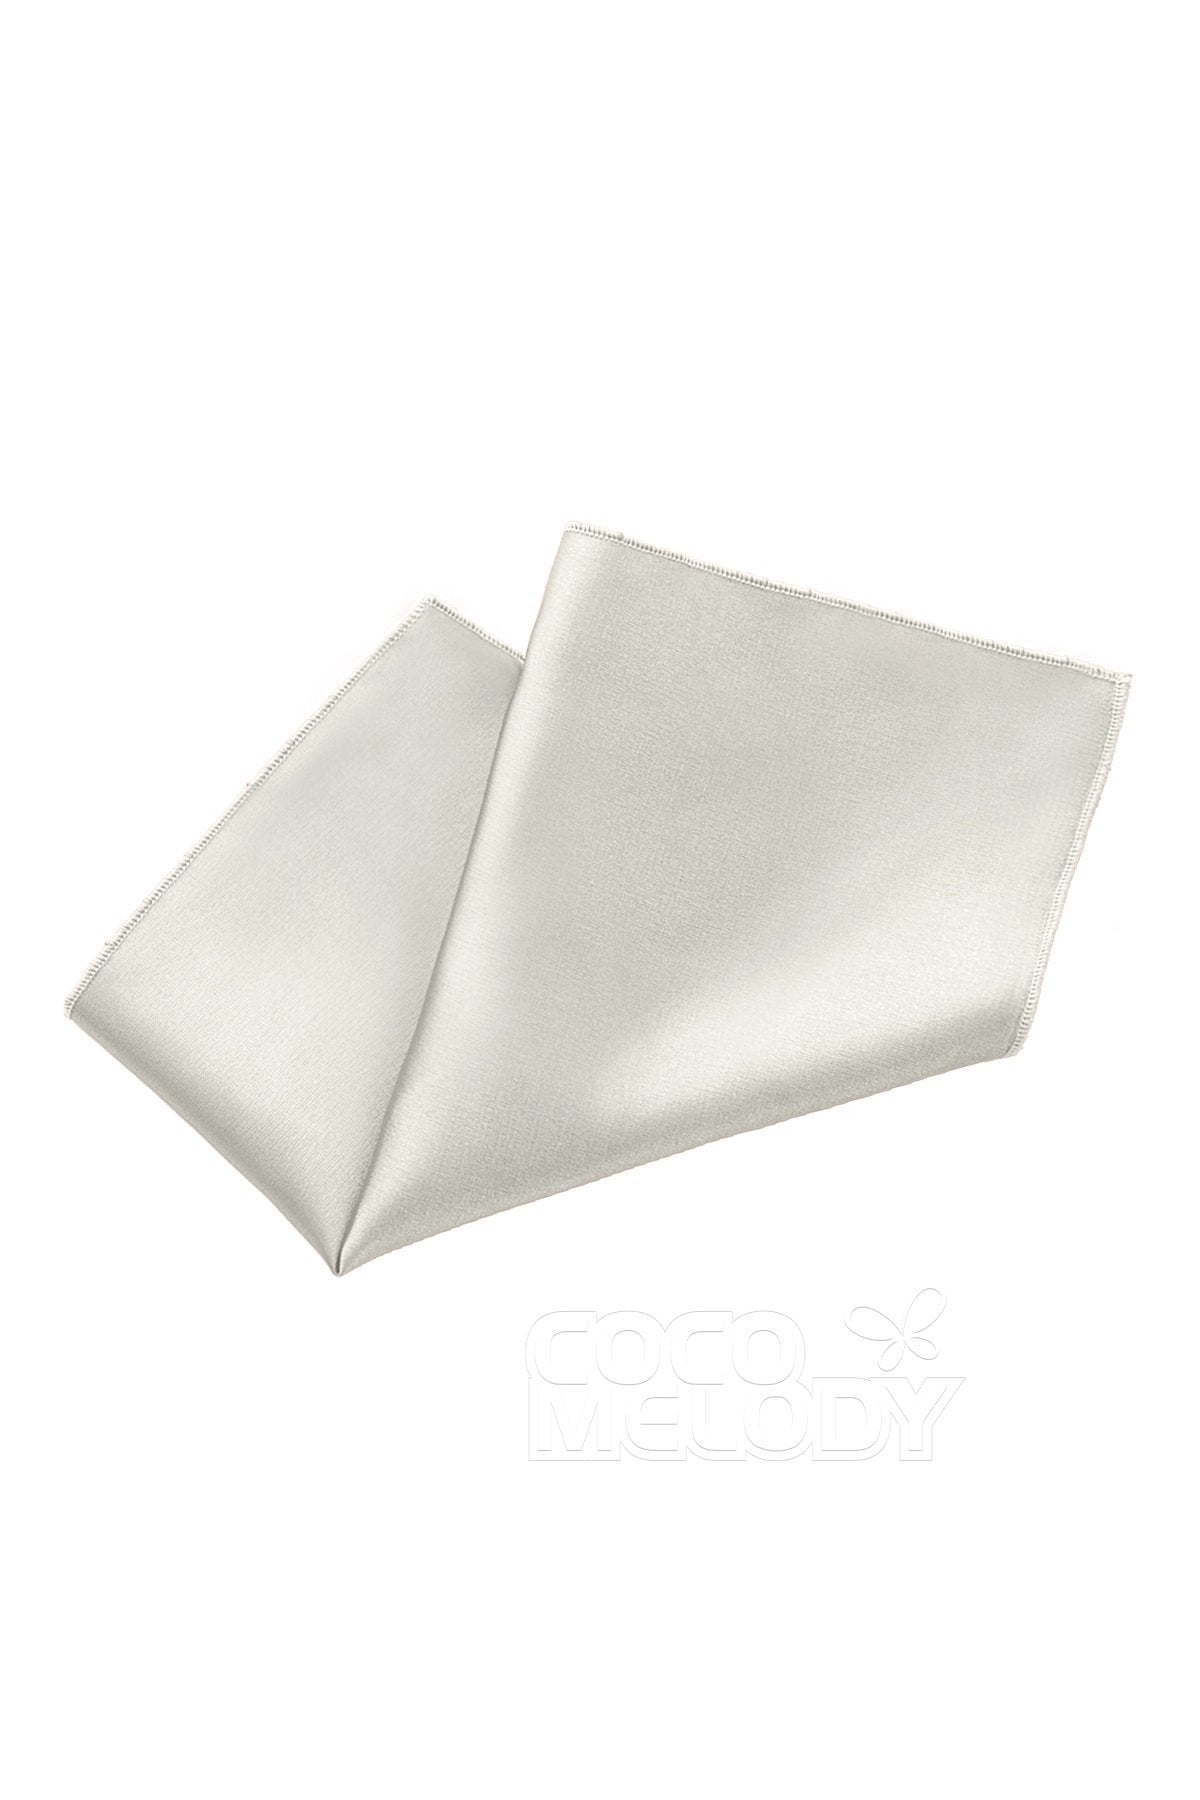 Elastic Silk Like Satin Pocket Square CZ170019